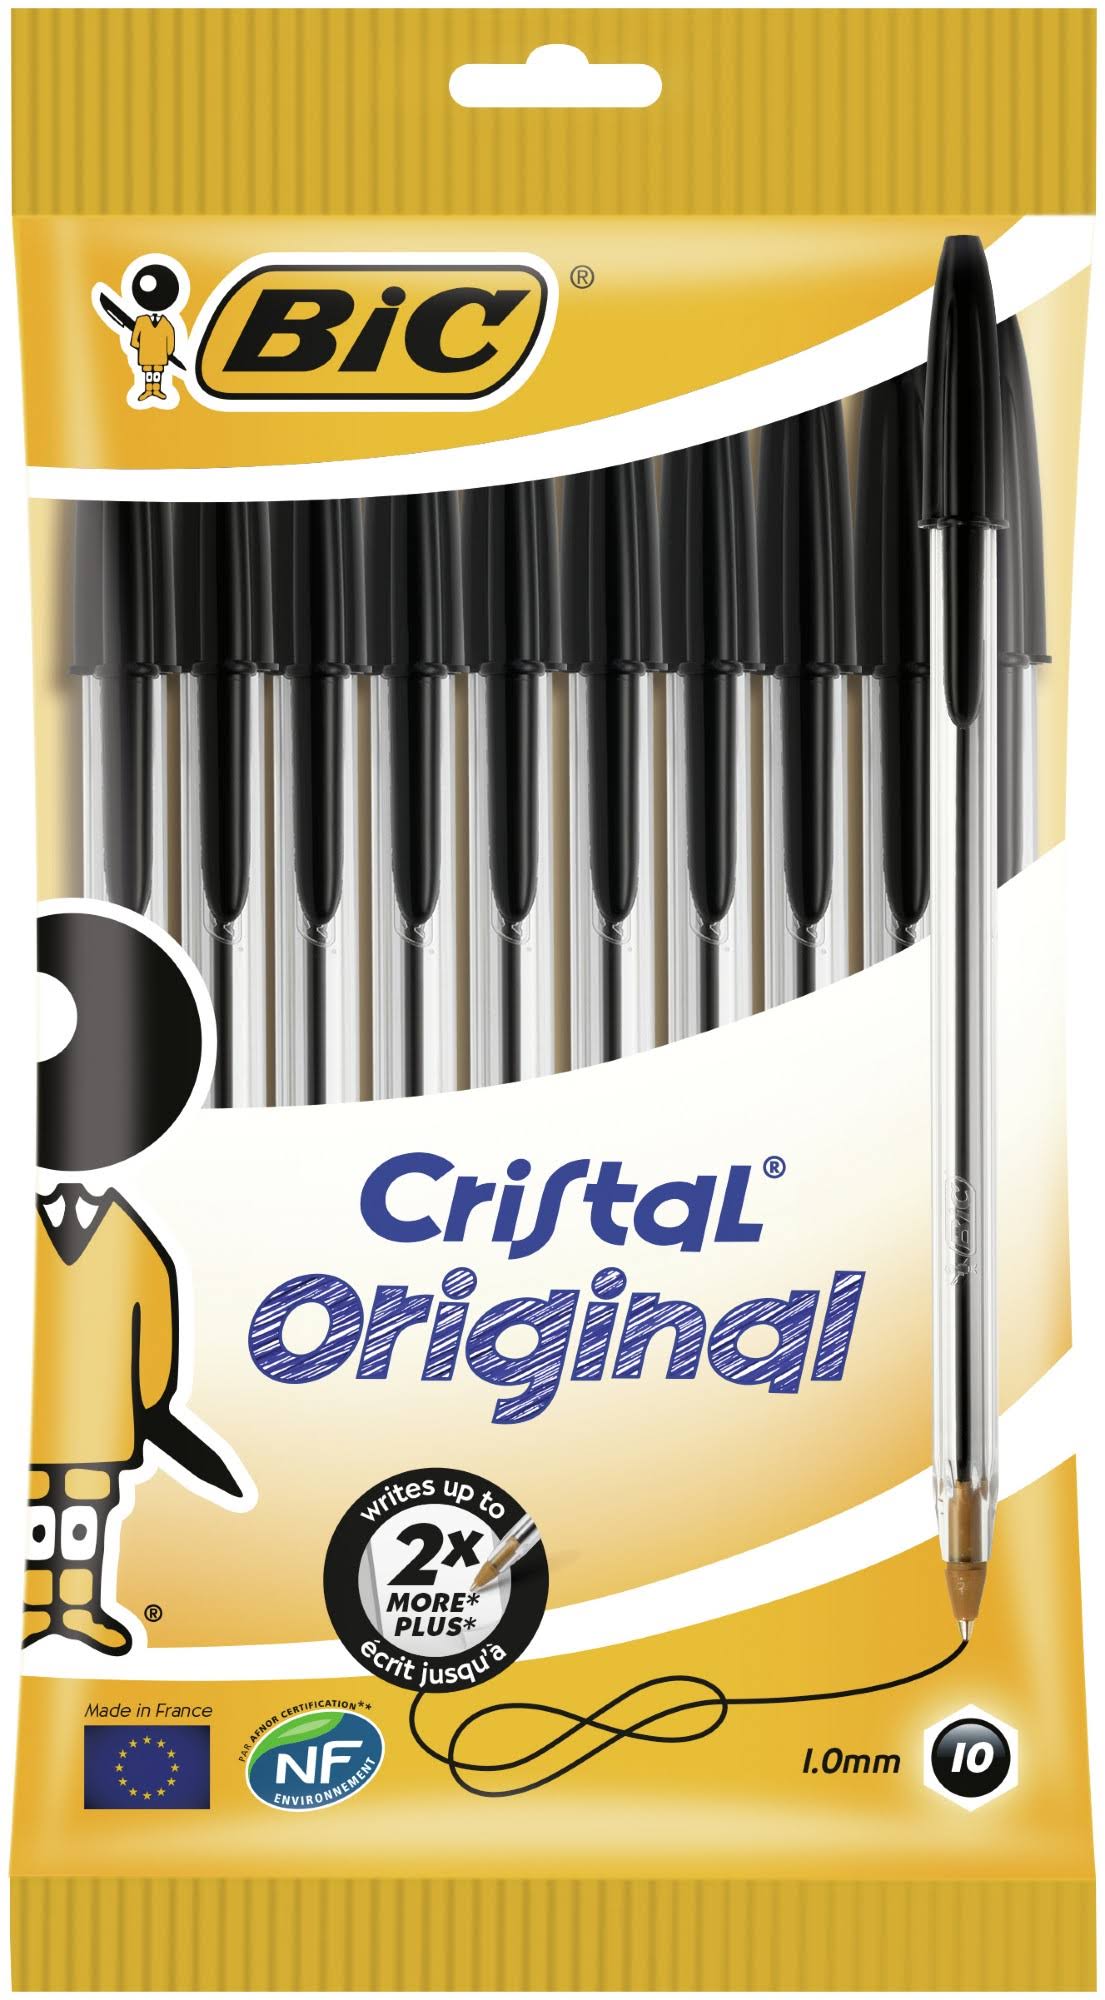 Bic Cristal Medium Ballpoint Pen - Black, 10pk